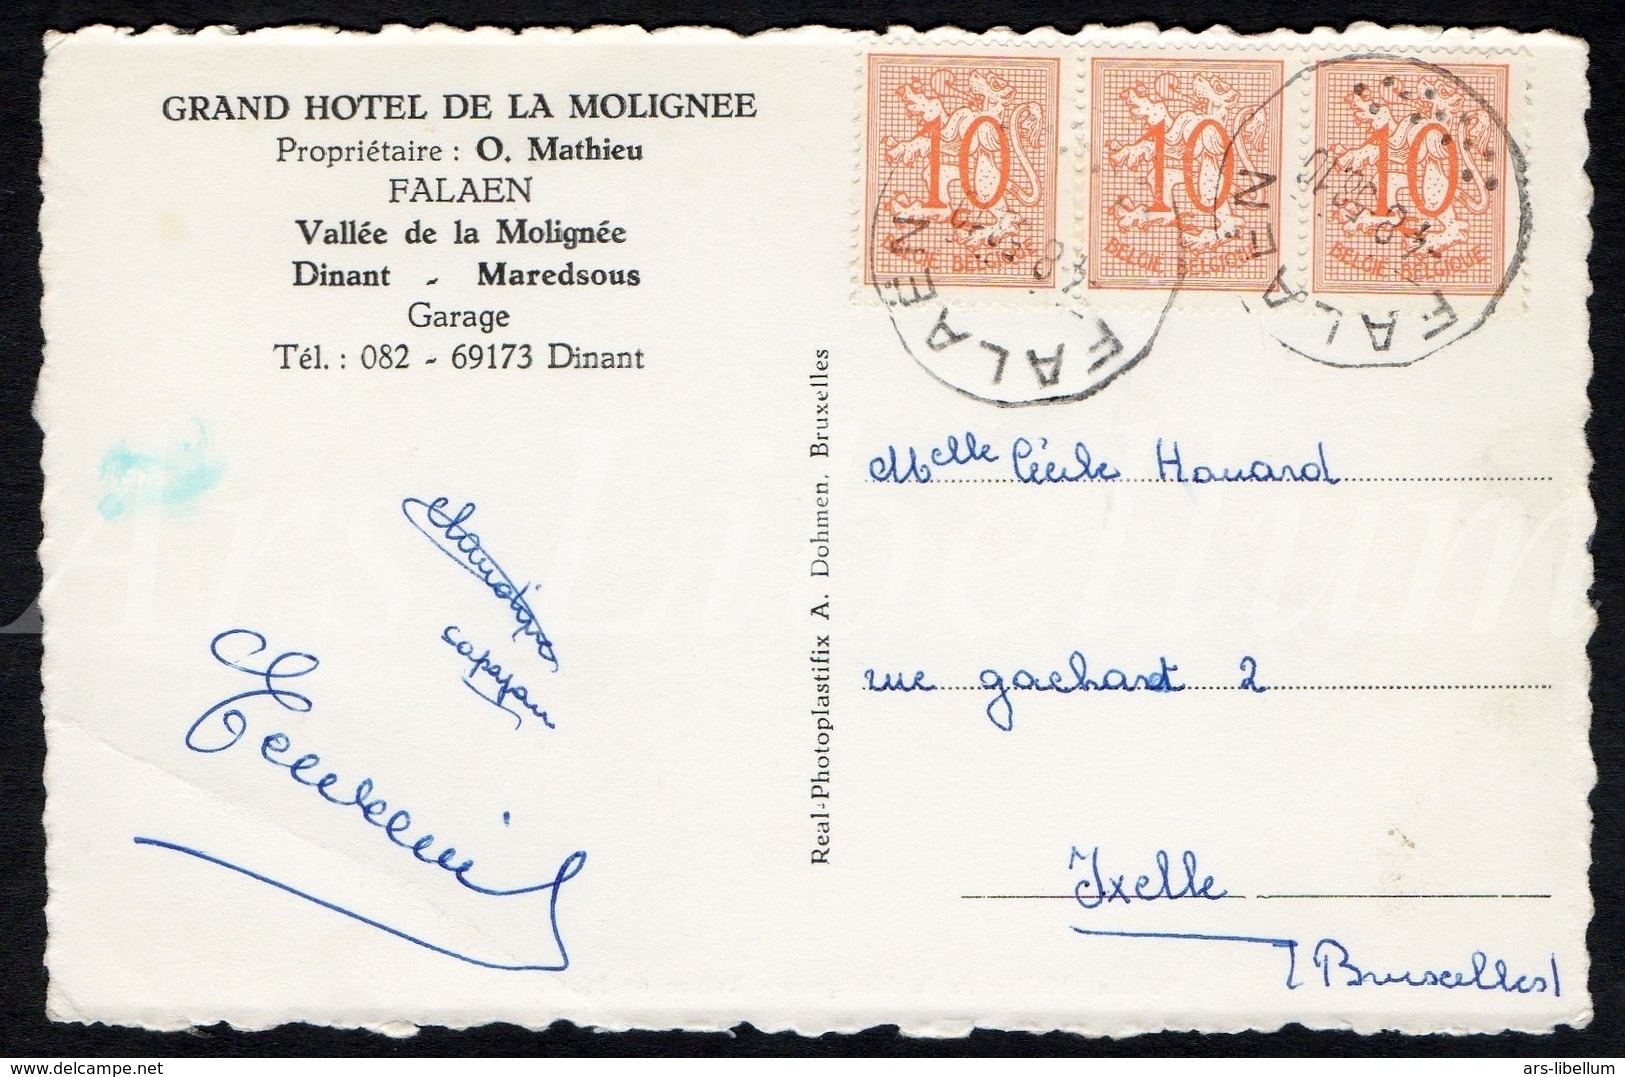 Postcard / CPA / Falaën / Vallée De La Molignée / Ruines De Montaigle / Albert / Real Photoplastifix A. Dohmen / 1958 - Onhaye